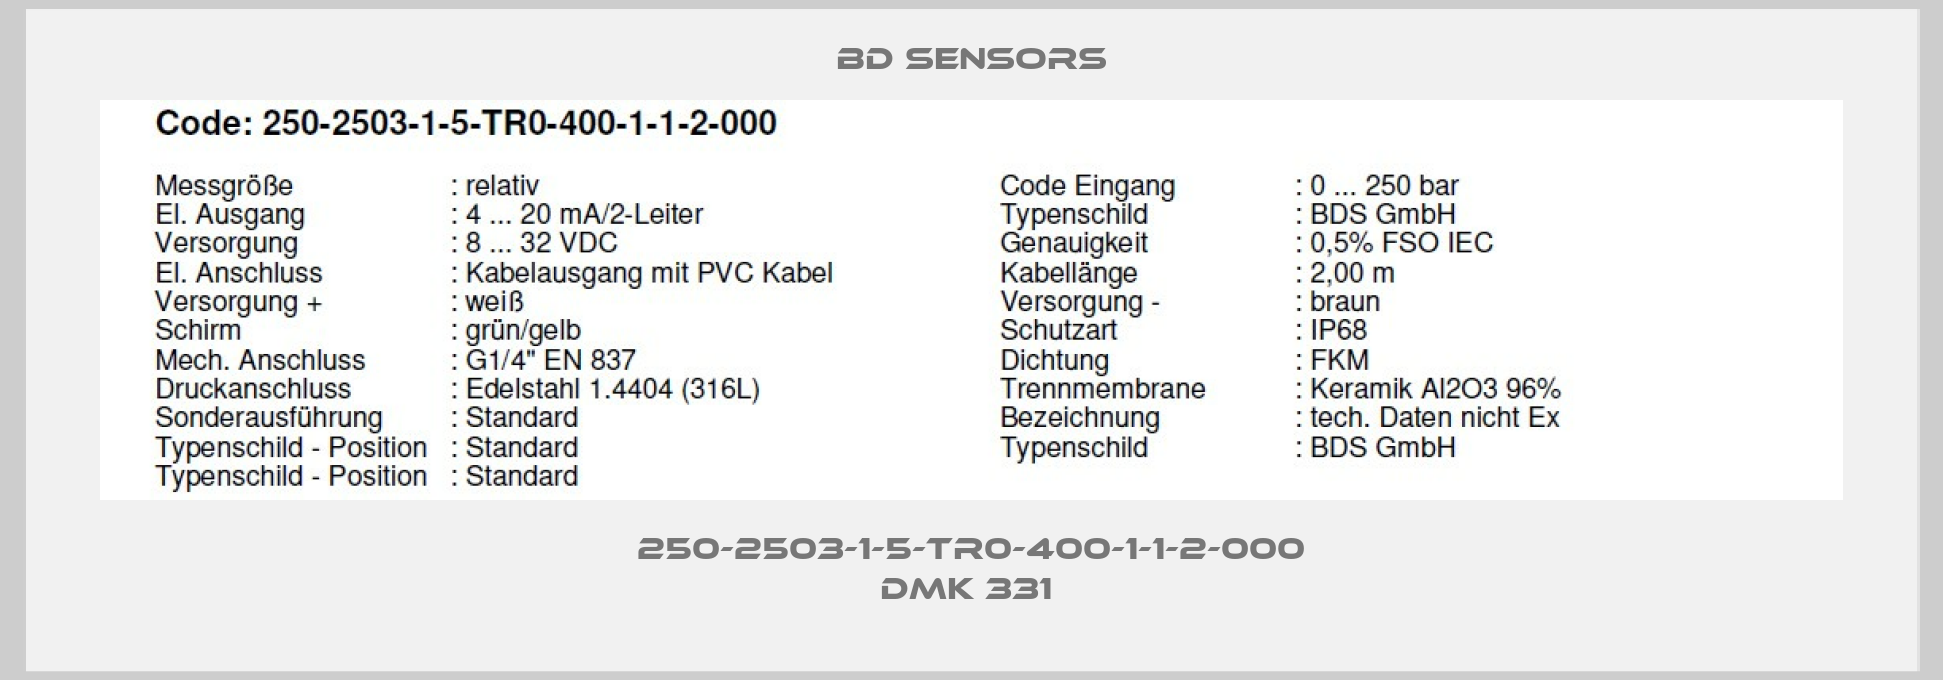 250-2503-1-5-TR0-400-1-1-2-000 DMK 331 -big